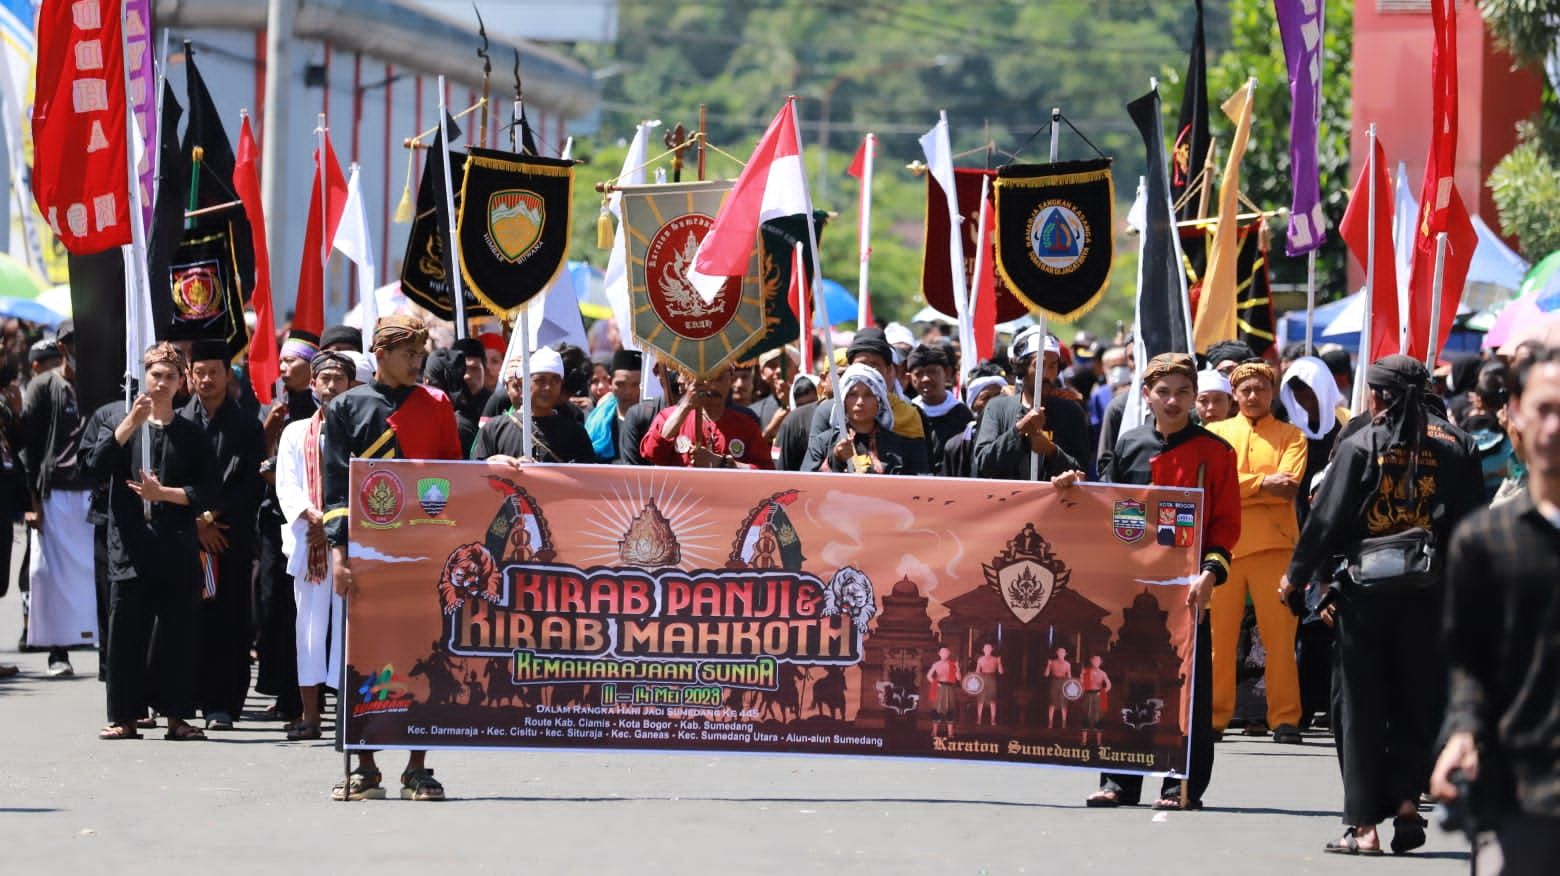 Kirab Panji dan Kirab Mahkota Kemaharajaan Sunda di Kabupaten Sumedang, Jawa Barat, Minggu, (14/5).